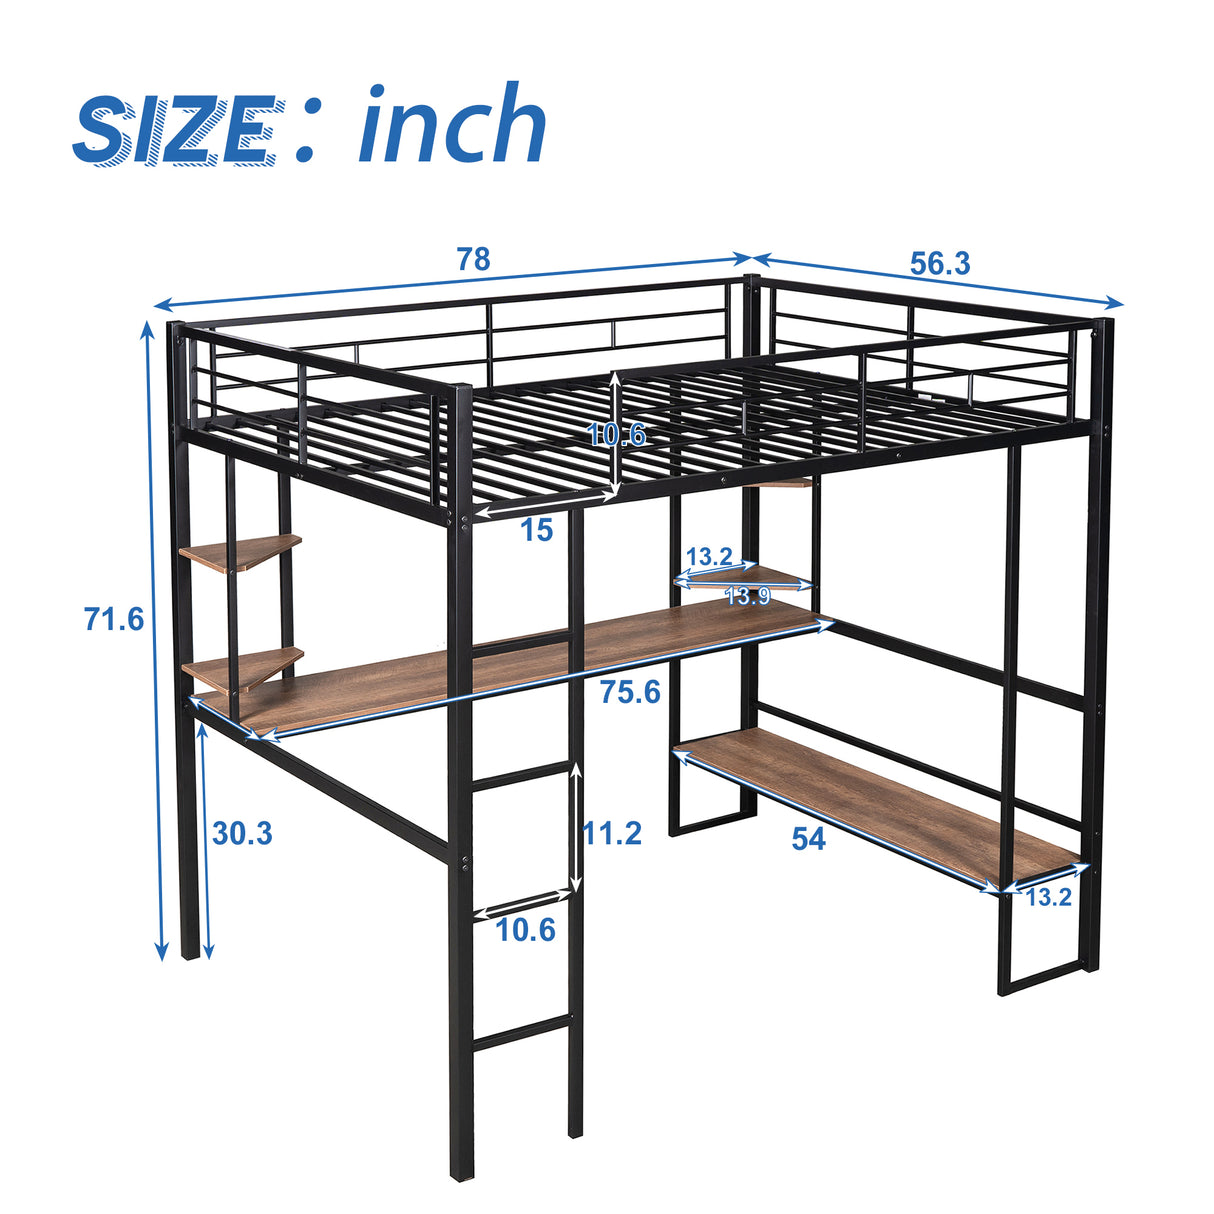 Full Size Loft Metal&MDF Bed with Long Desk and Shelves,Black - Home Elegance USA